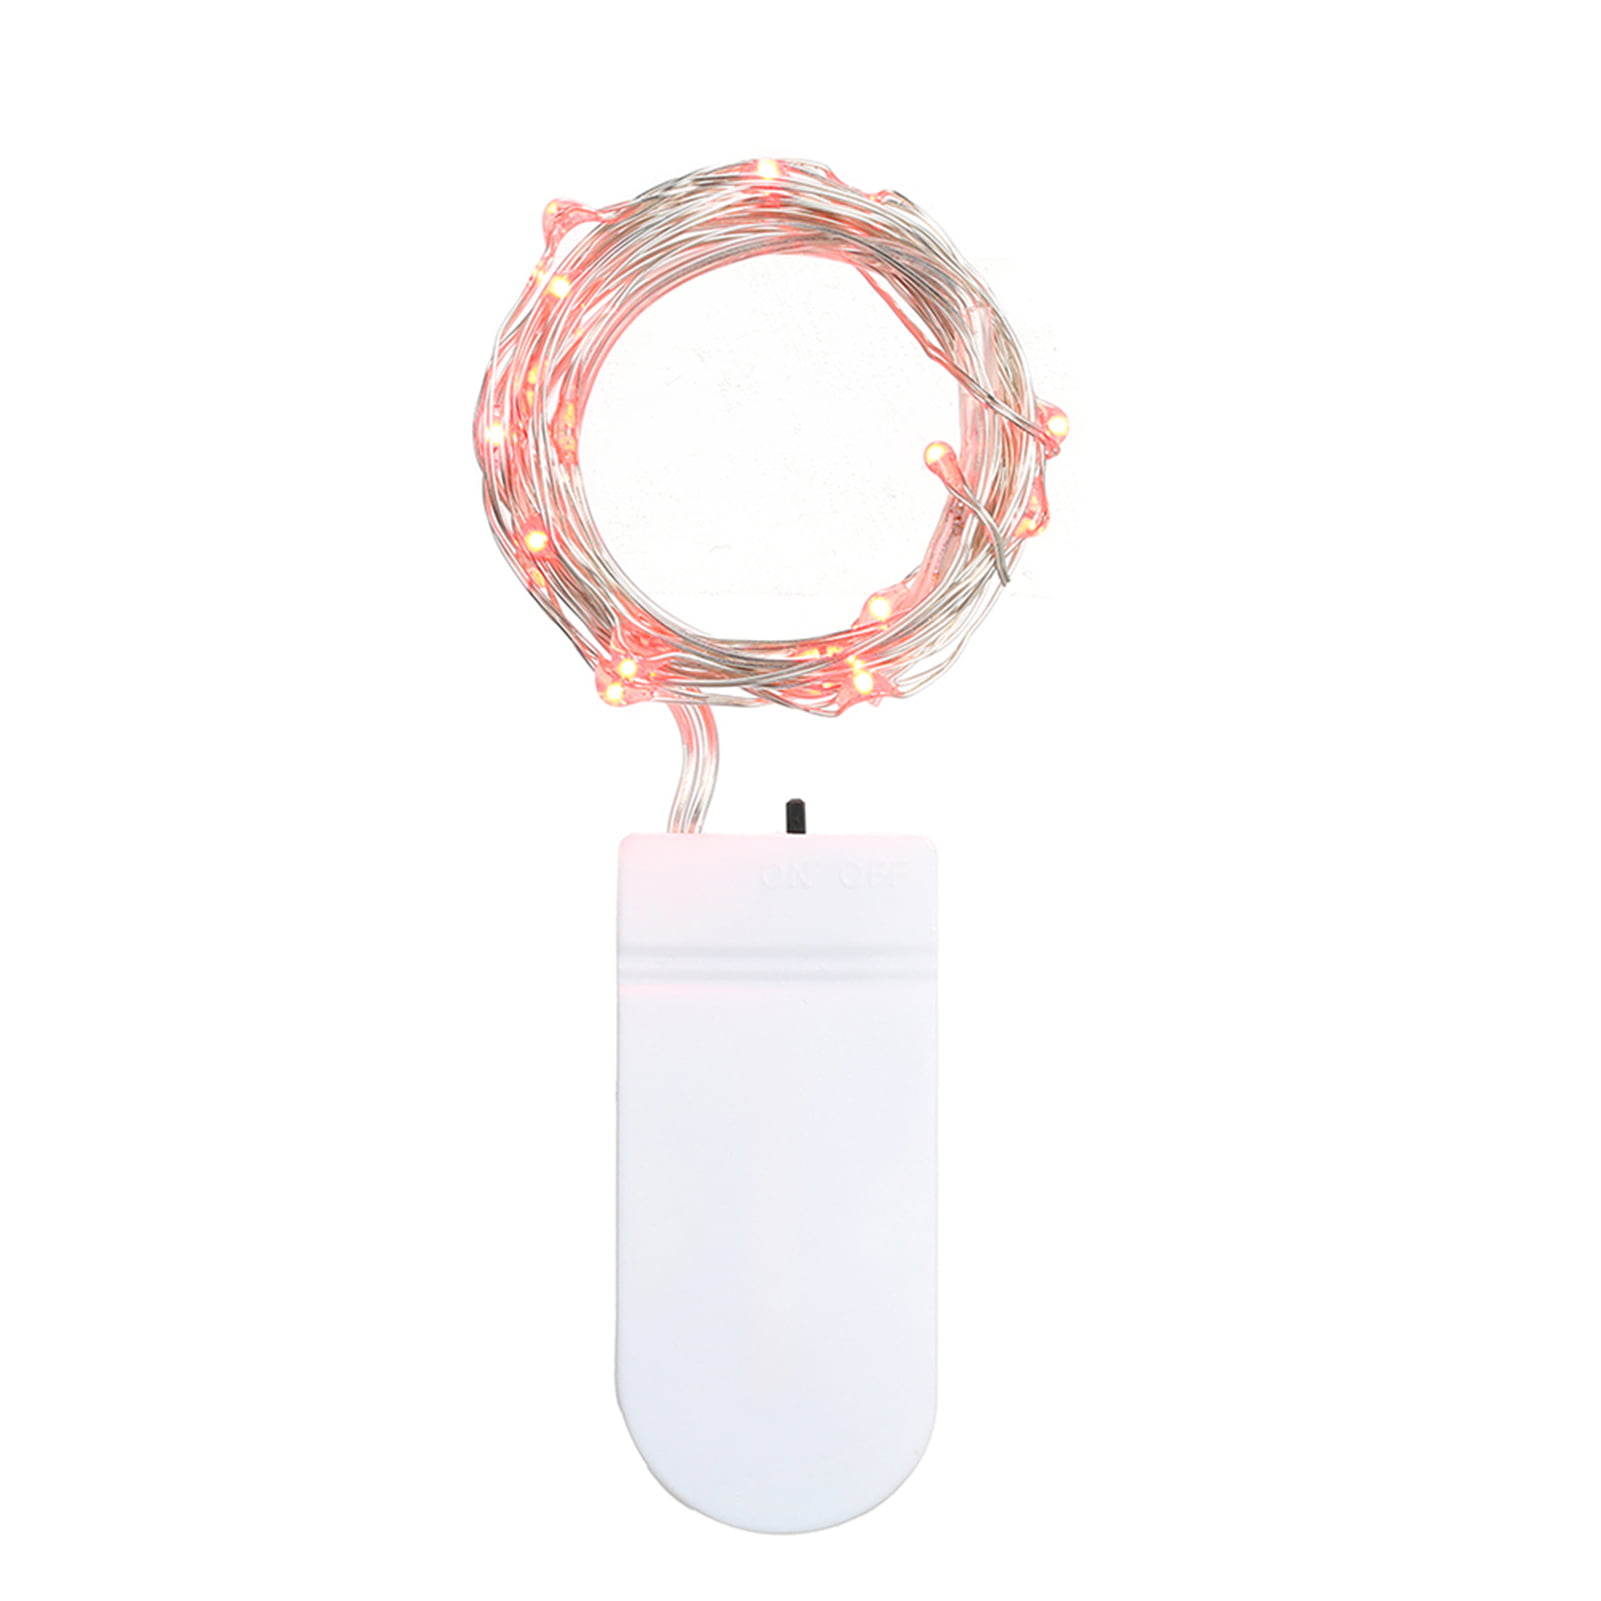 1m 3.3ft white LED Peach Blossom Tree light Wedding Christmas Holiday Light New 